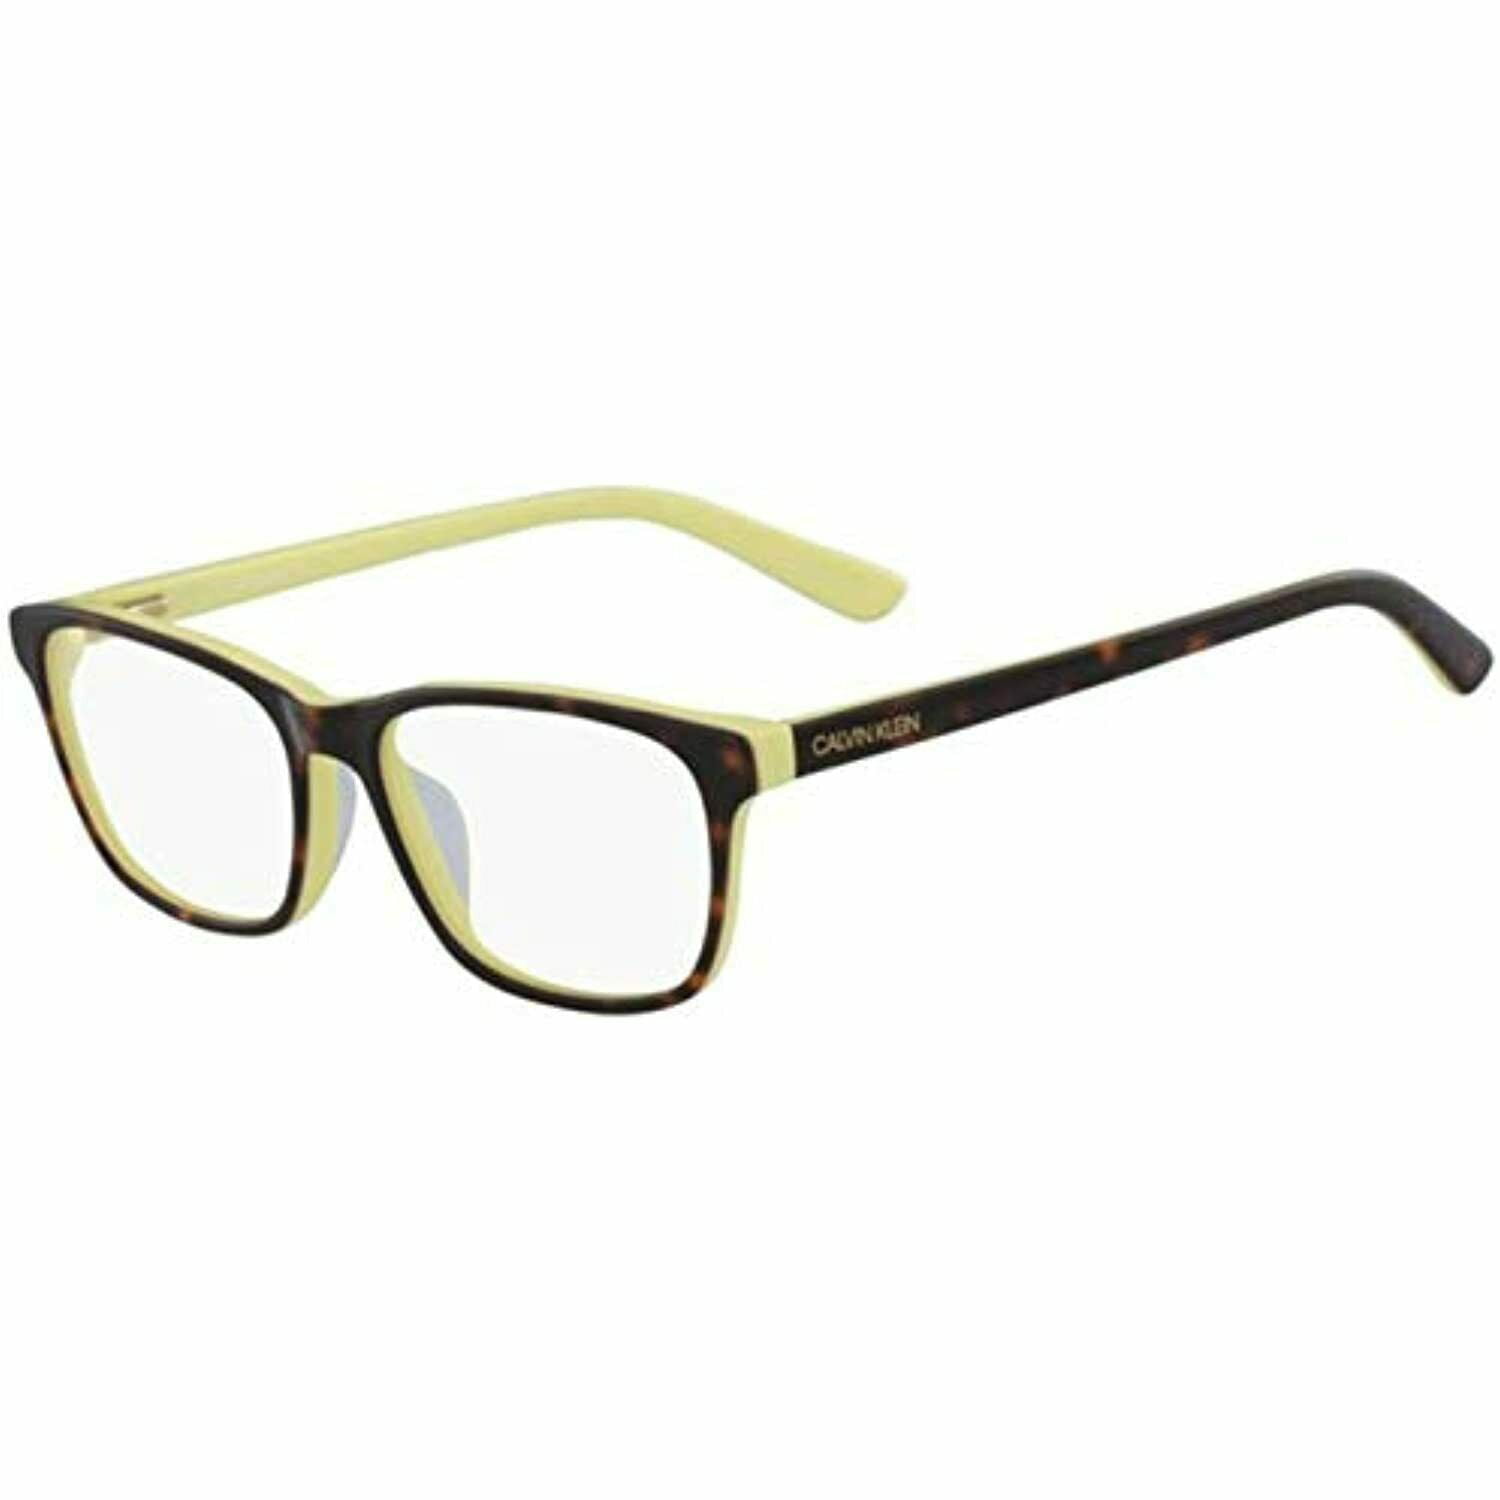 CALVIN KLEIN CK 18515 241 Eyeglasses Tortoise Yellow Frame 53mm - Walmart .com